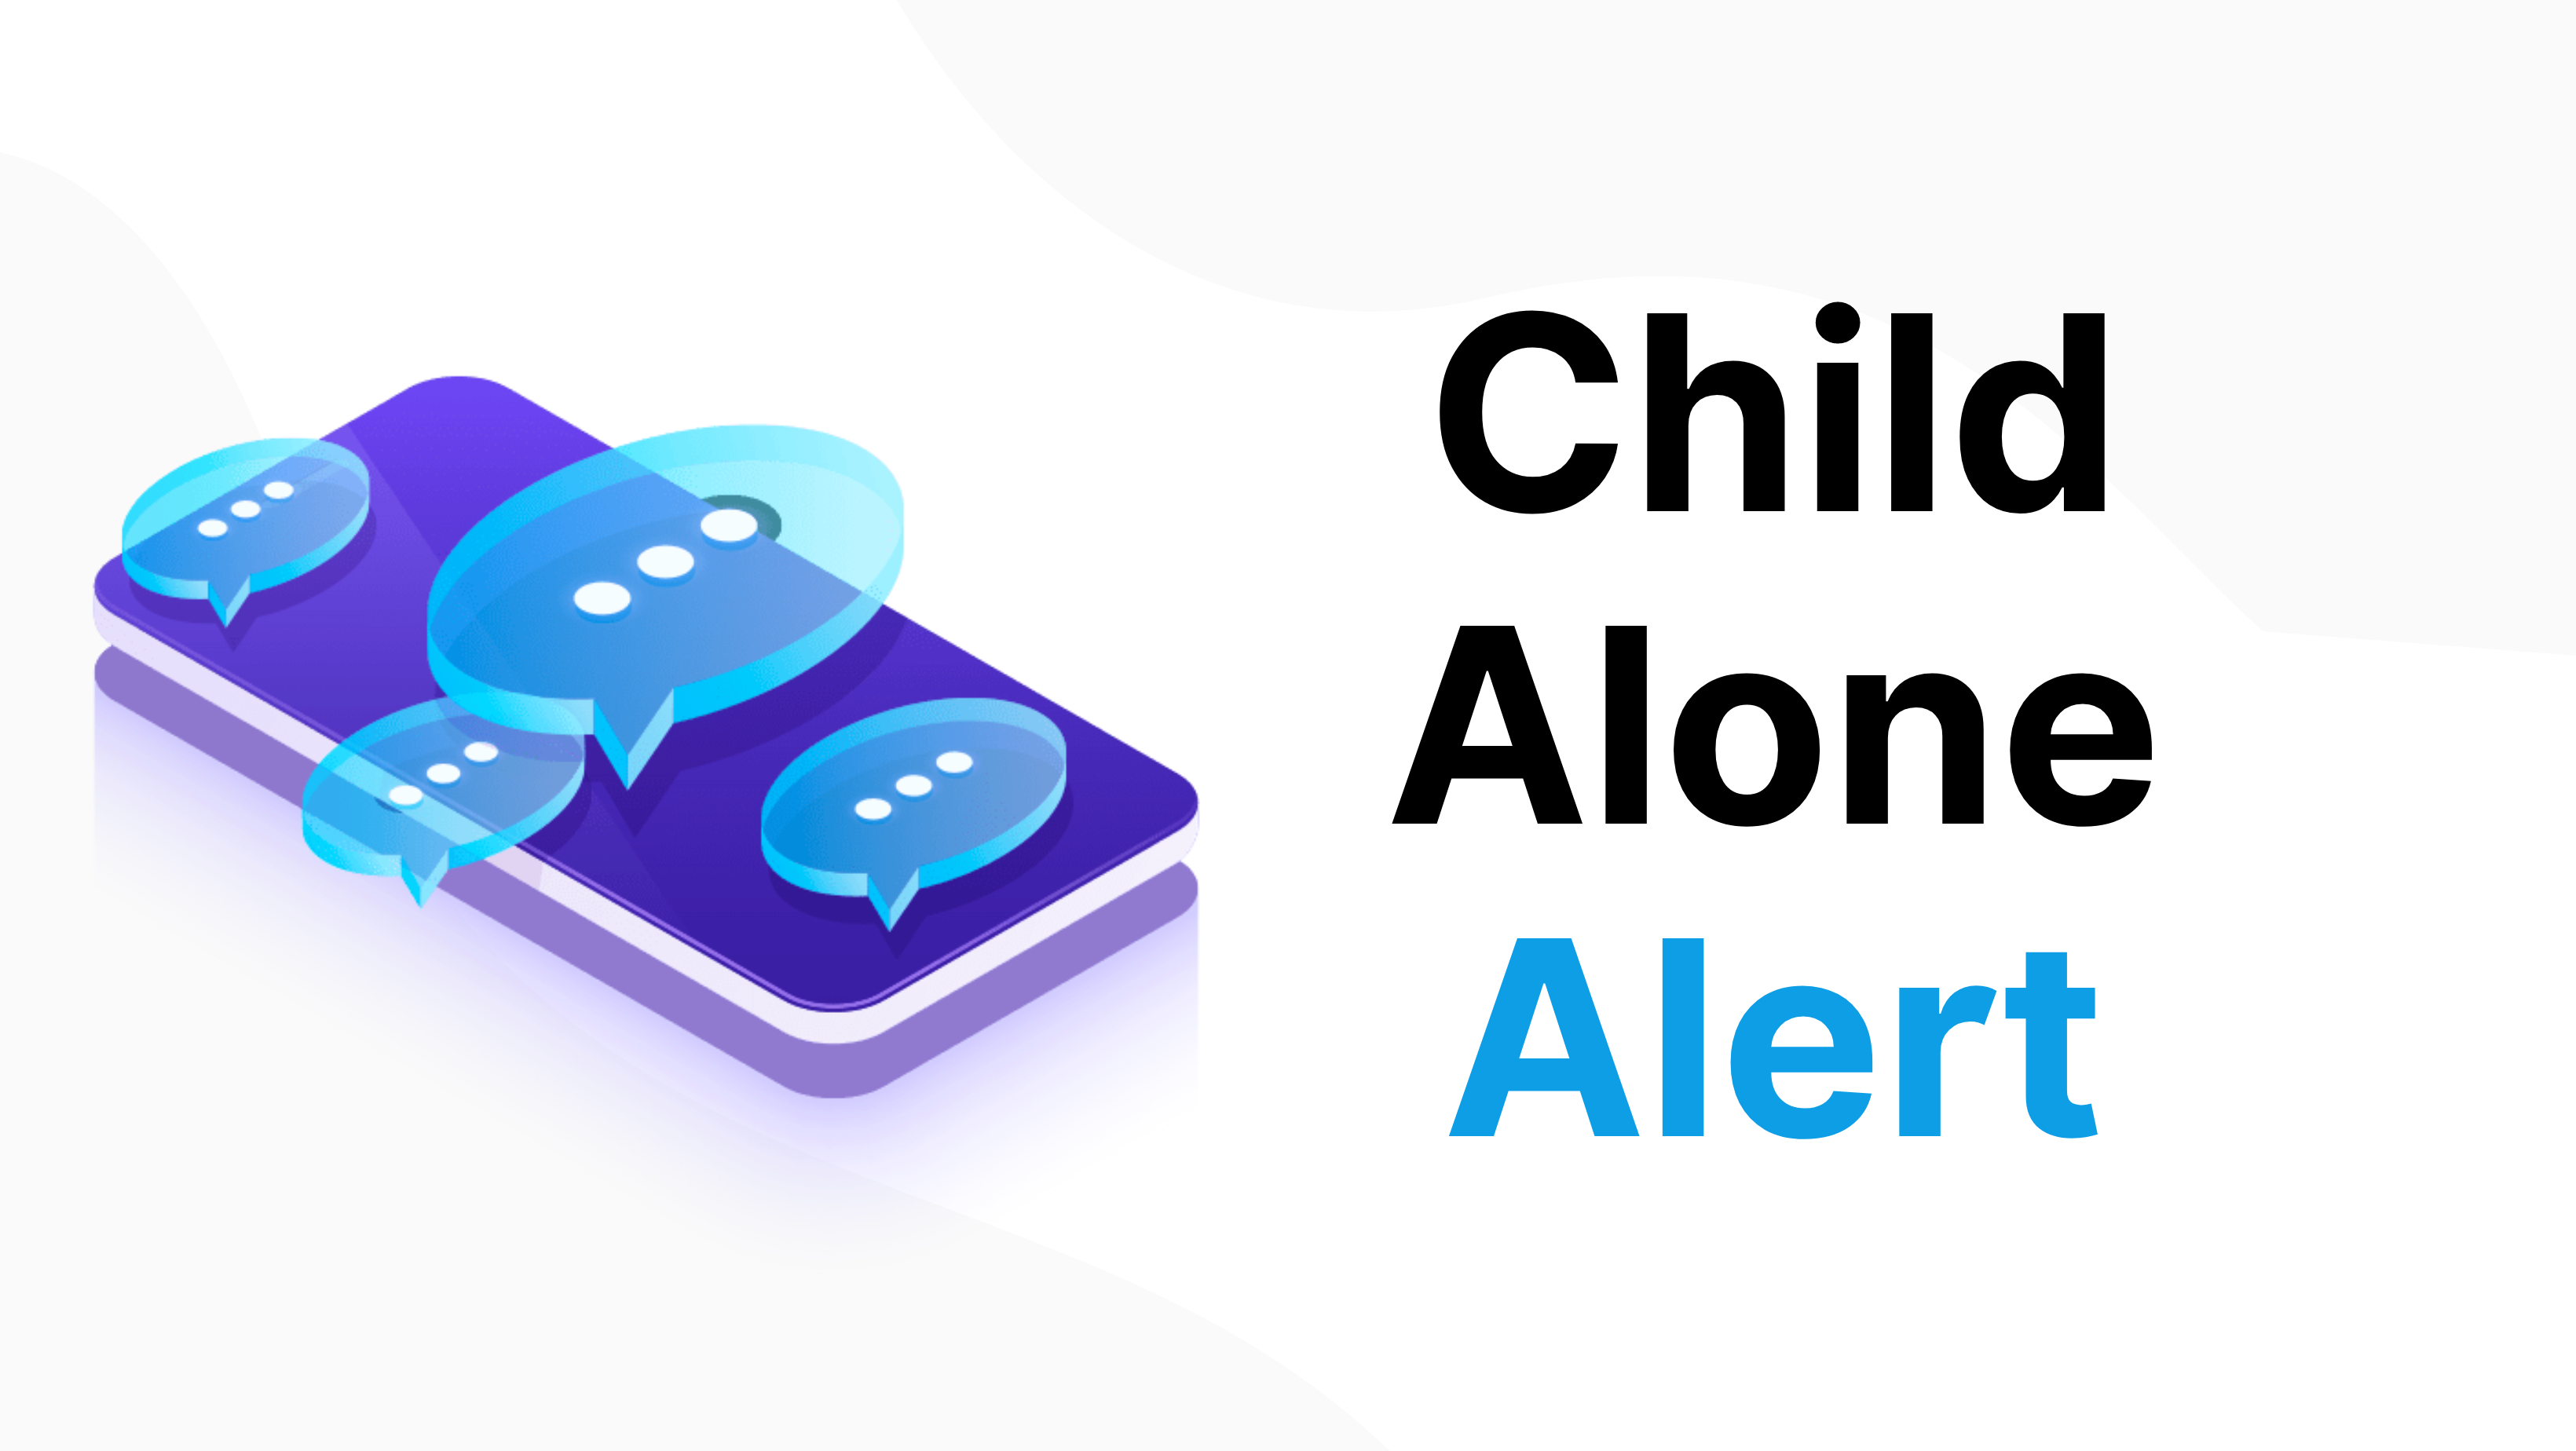 Child Alone Alert